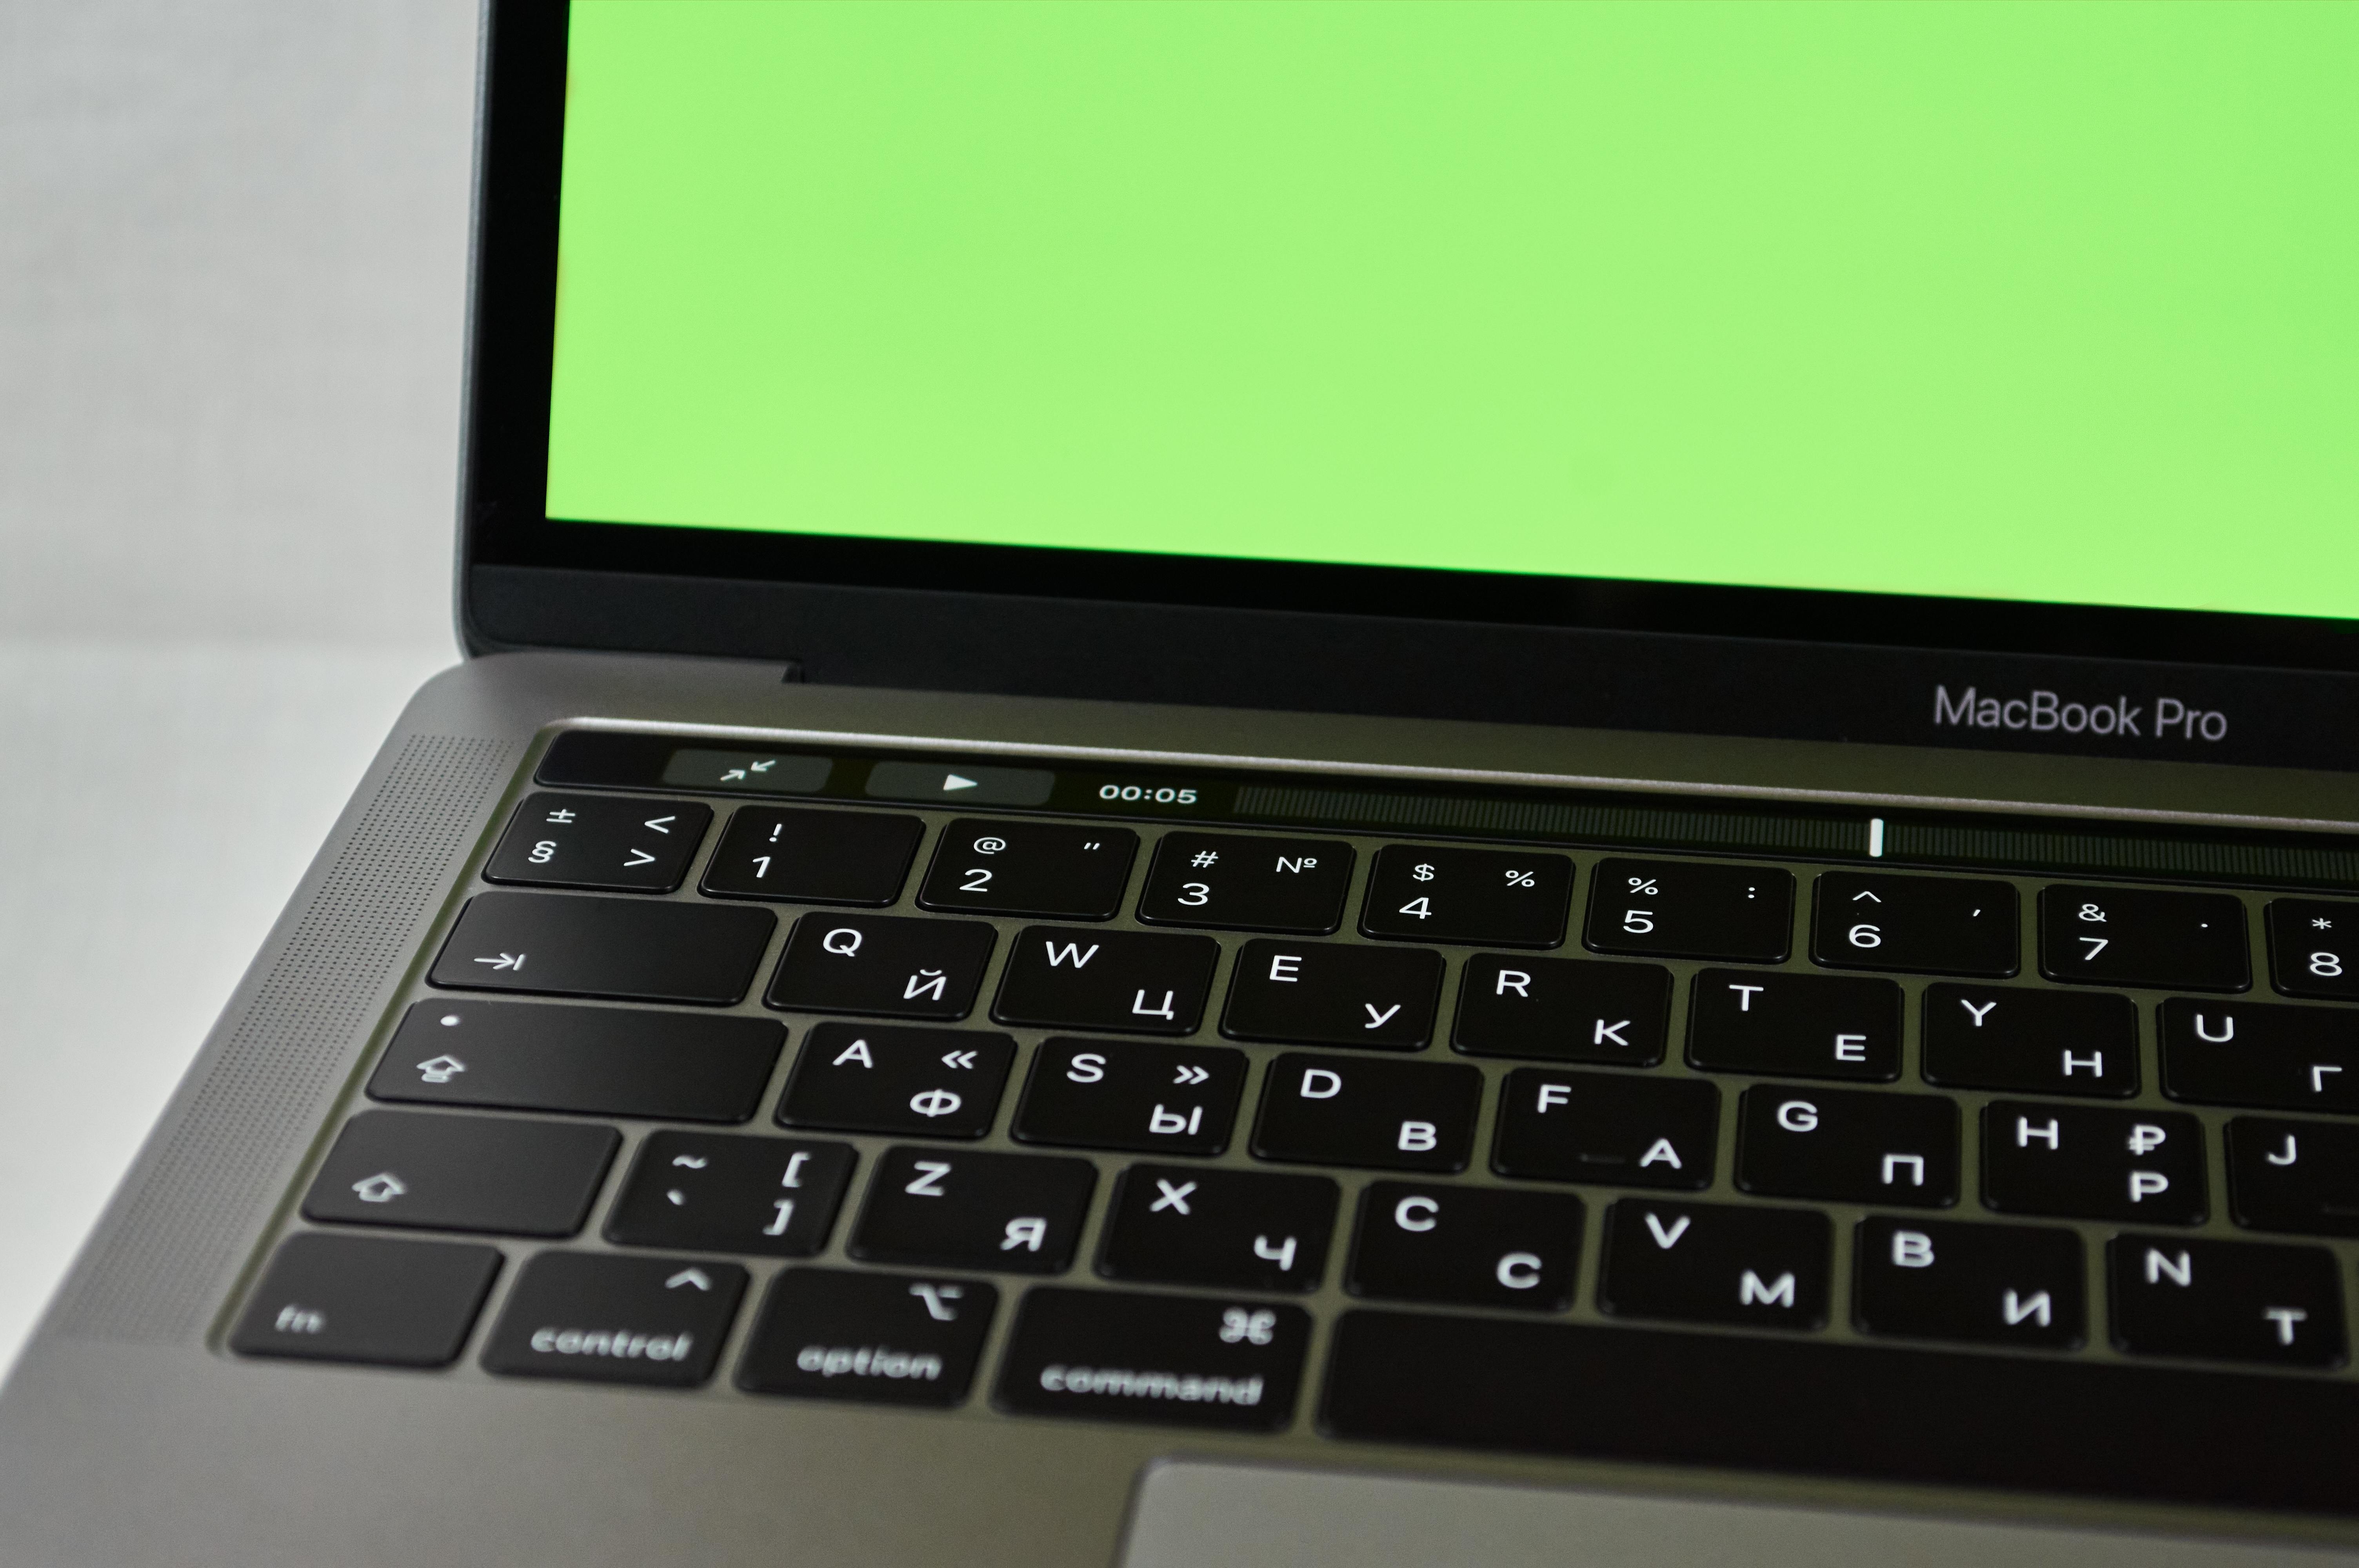 Download Close-Up Photo MacBook Pro · Free Stock Photo